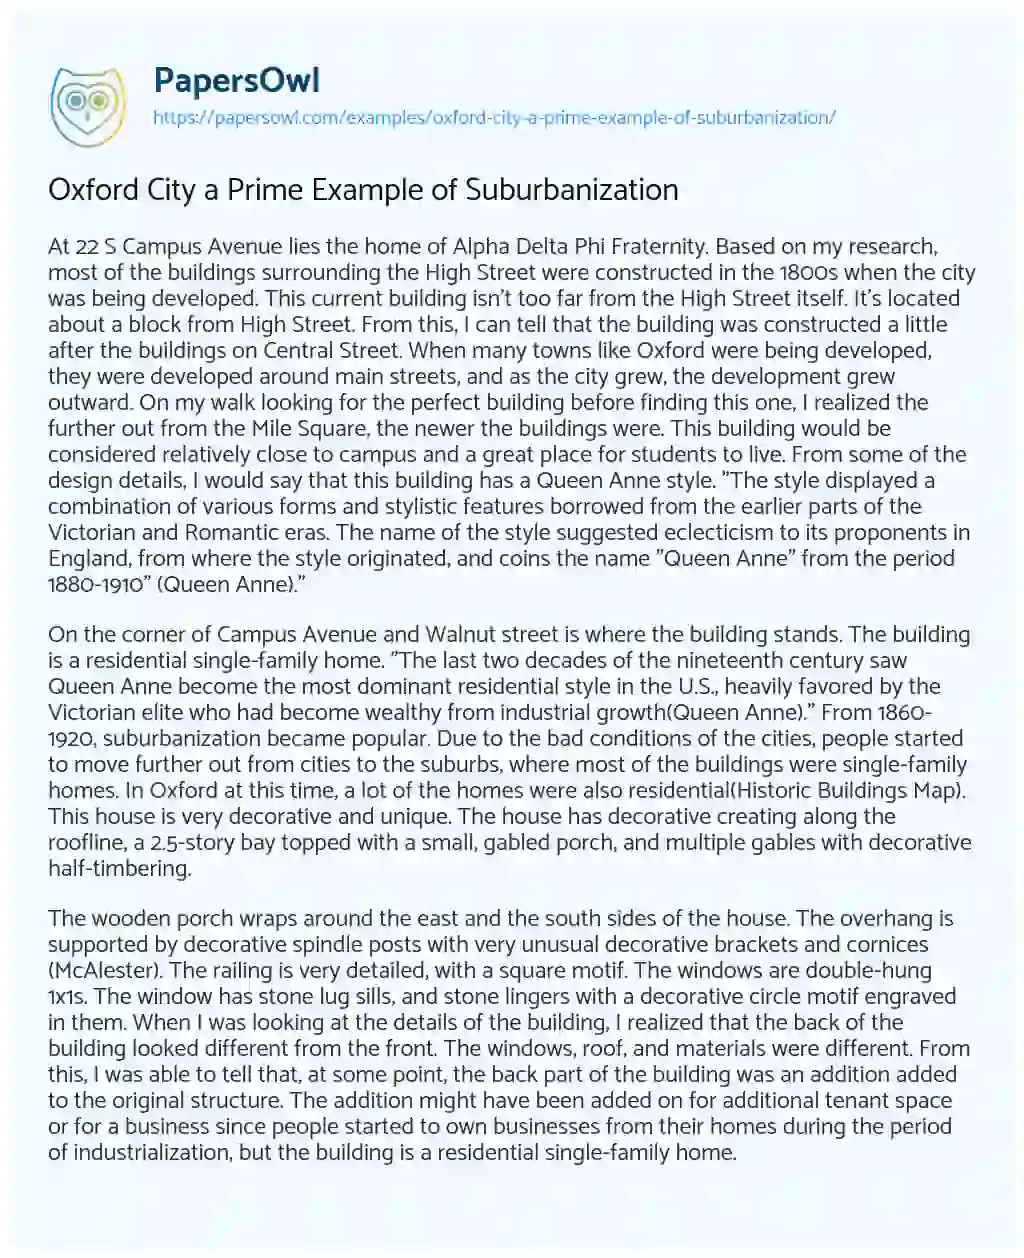 Essay on Oxford City a Prime Example of Suburbanization